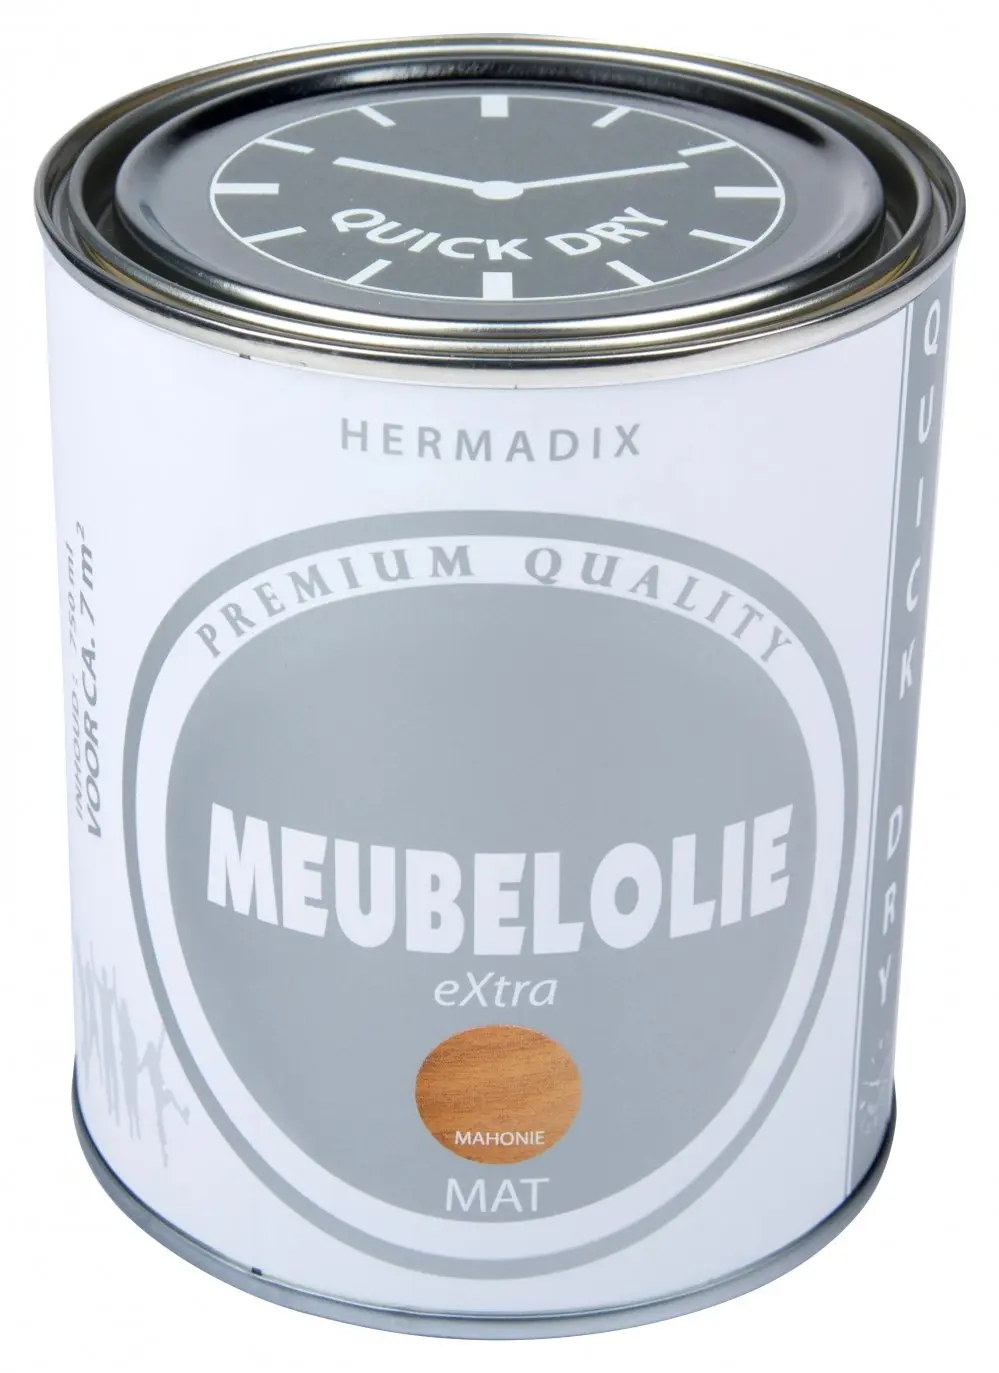 Hermadix - hermadix-meubellolie-extra-mat-mahonie1-verfcompleet.nl